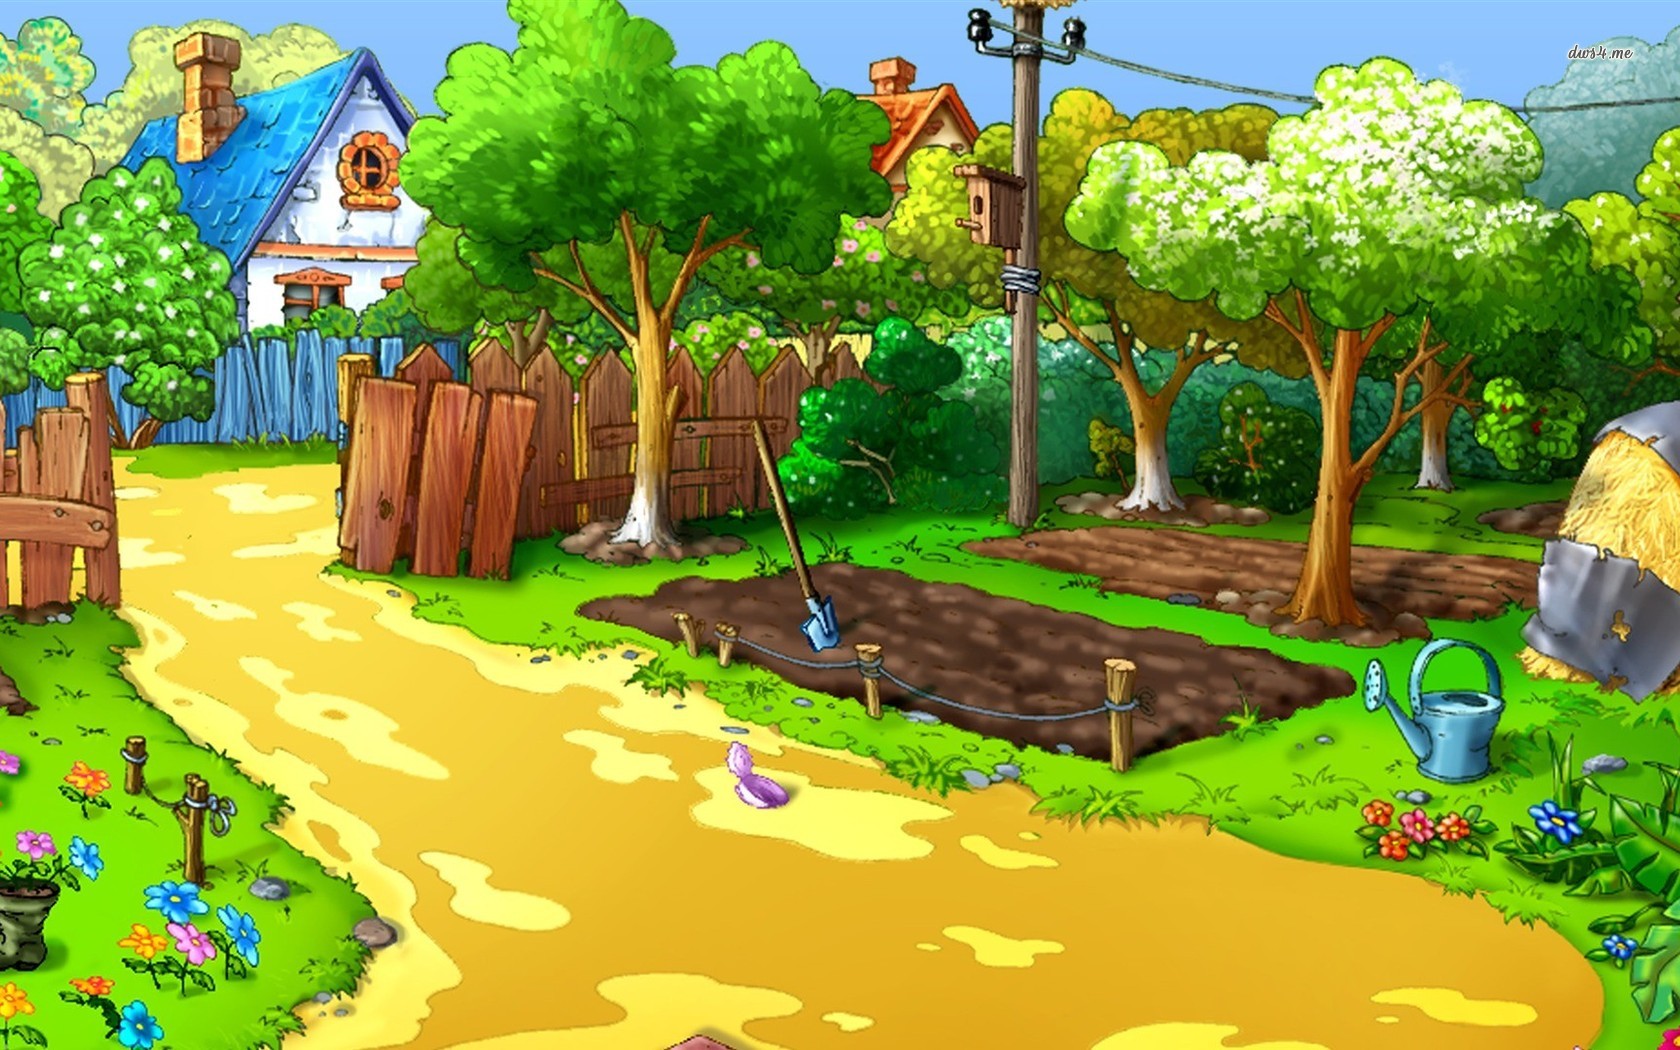 Cartoon Farm Background